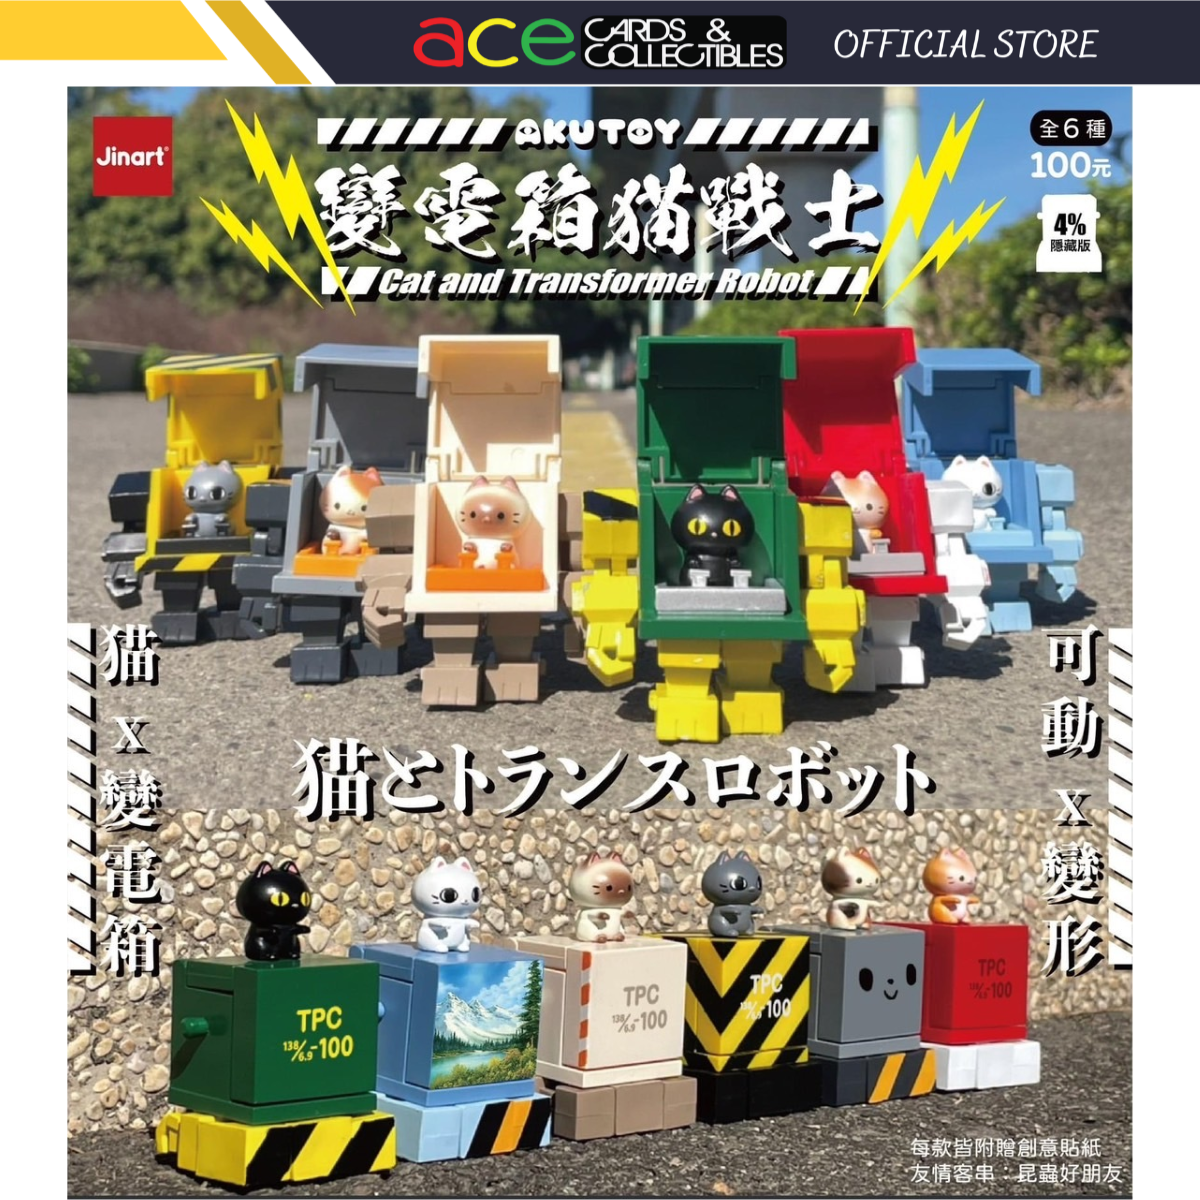 Jinart x AKUTOY Transformer Box Cat Warrior Series-Single Box (Random)-toycity-Ace Cards & Collectibles